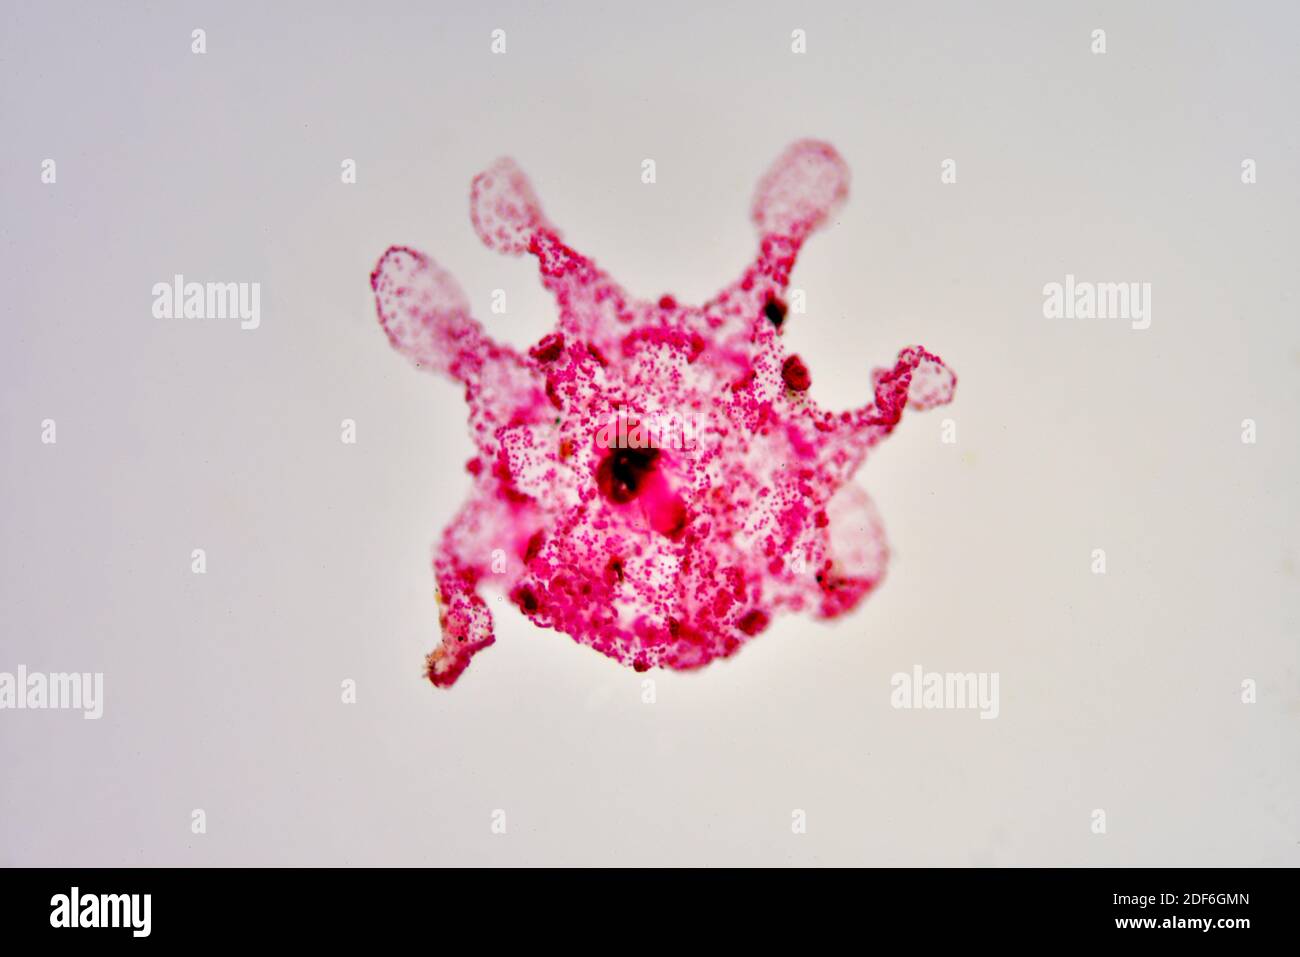 Aurelia aurita, ephyra larva. Microscopio óptico X100. Foto de stock